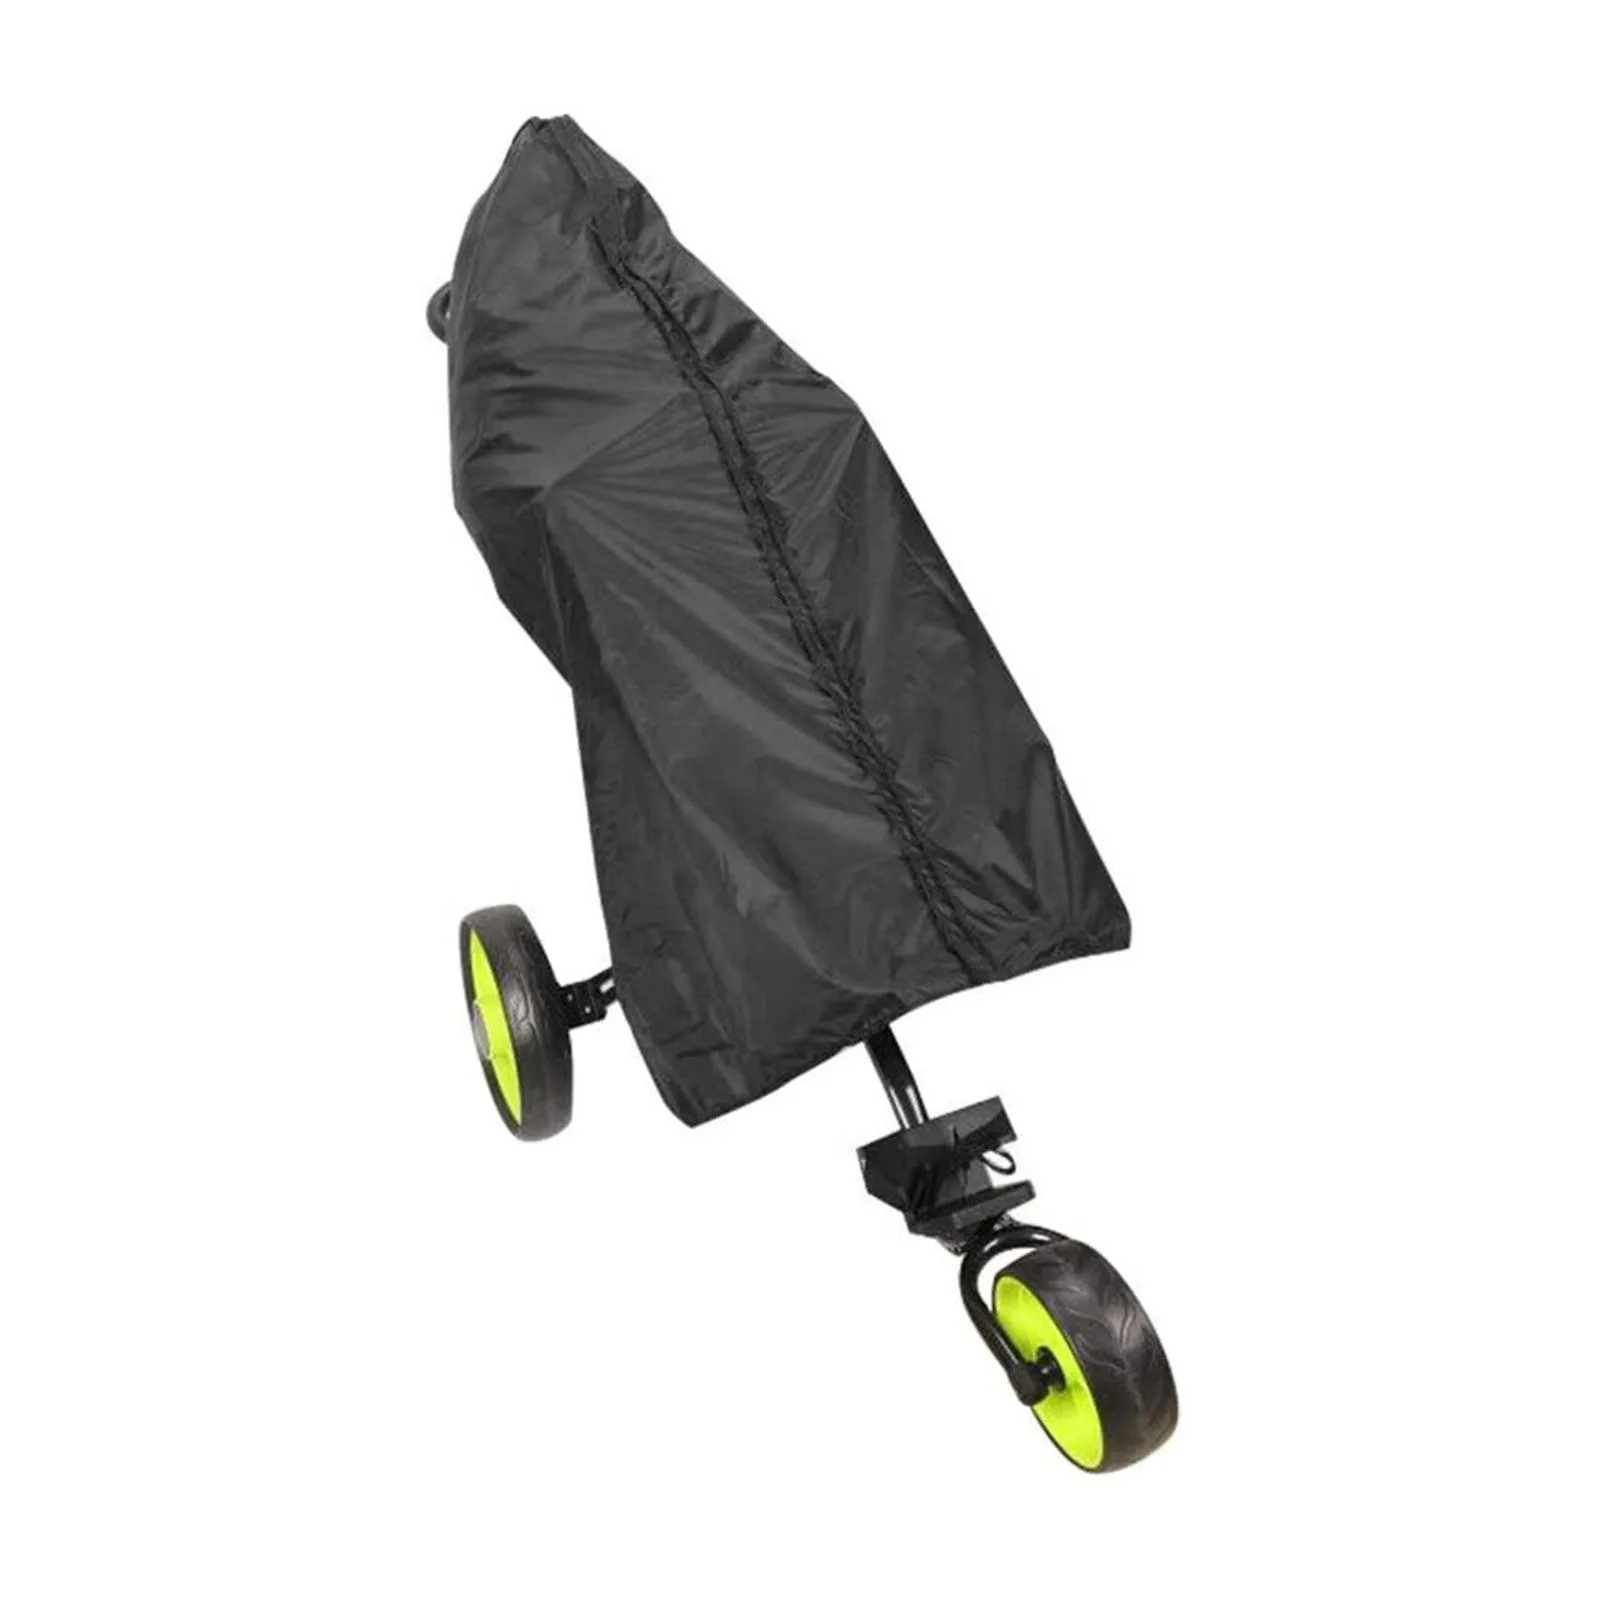 Oxford Waterproof Rain Push Cart Heavy Duty Club Bags Raincoat Great For Golfer At Outdoor Fields